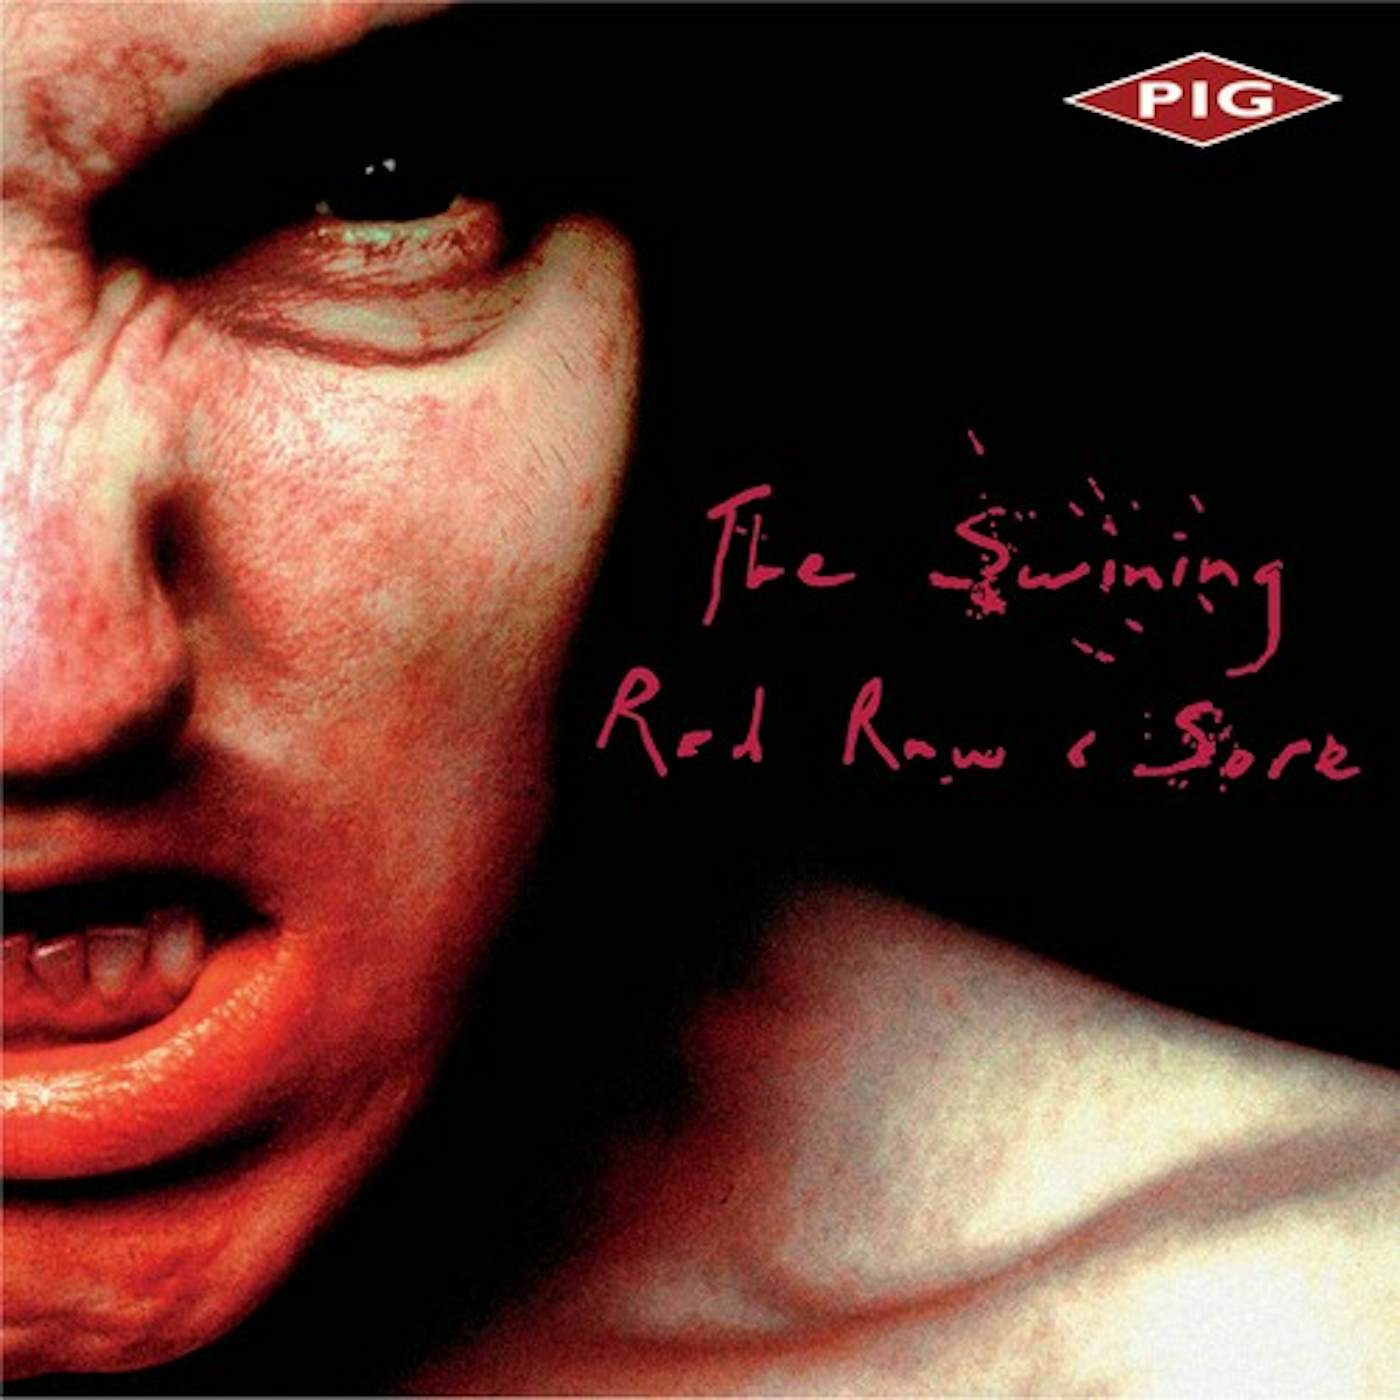 PIG SWINING / RED RAW & SORE - PINK Vinyl Record